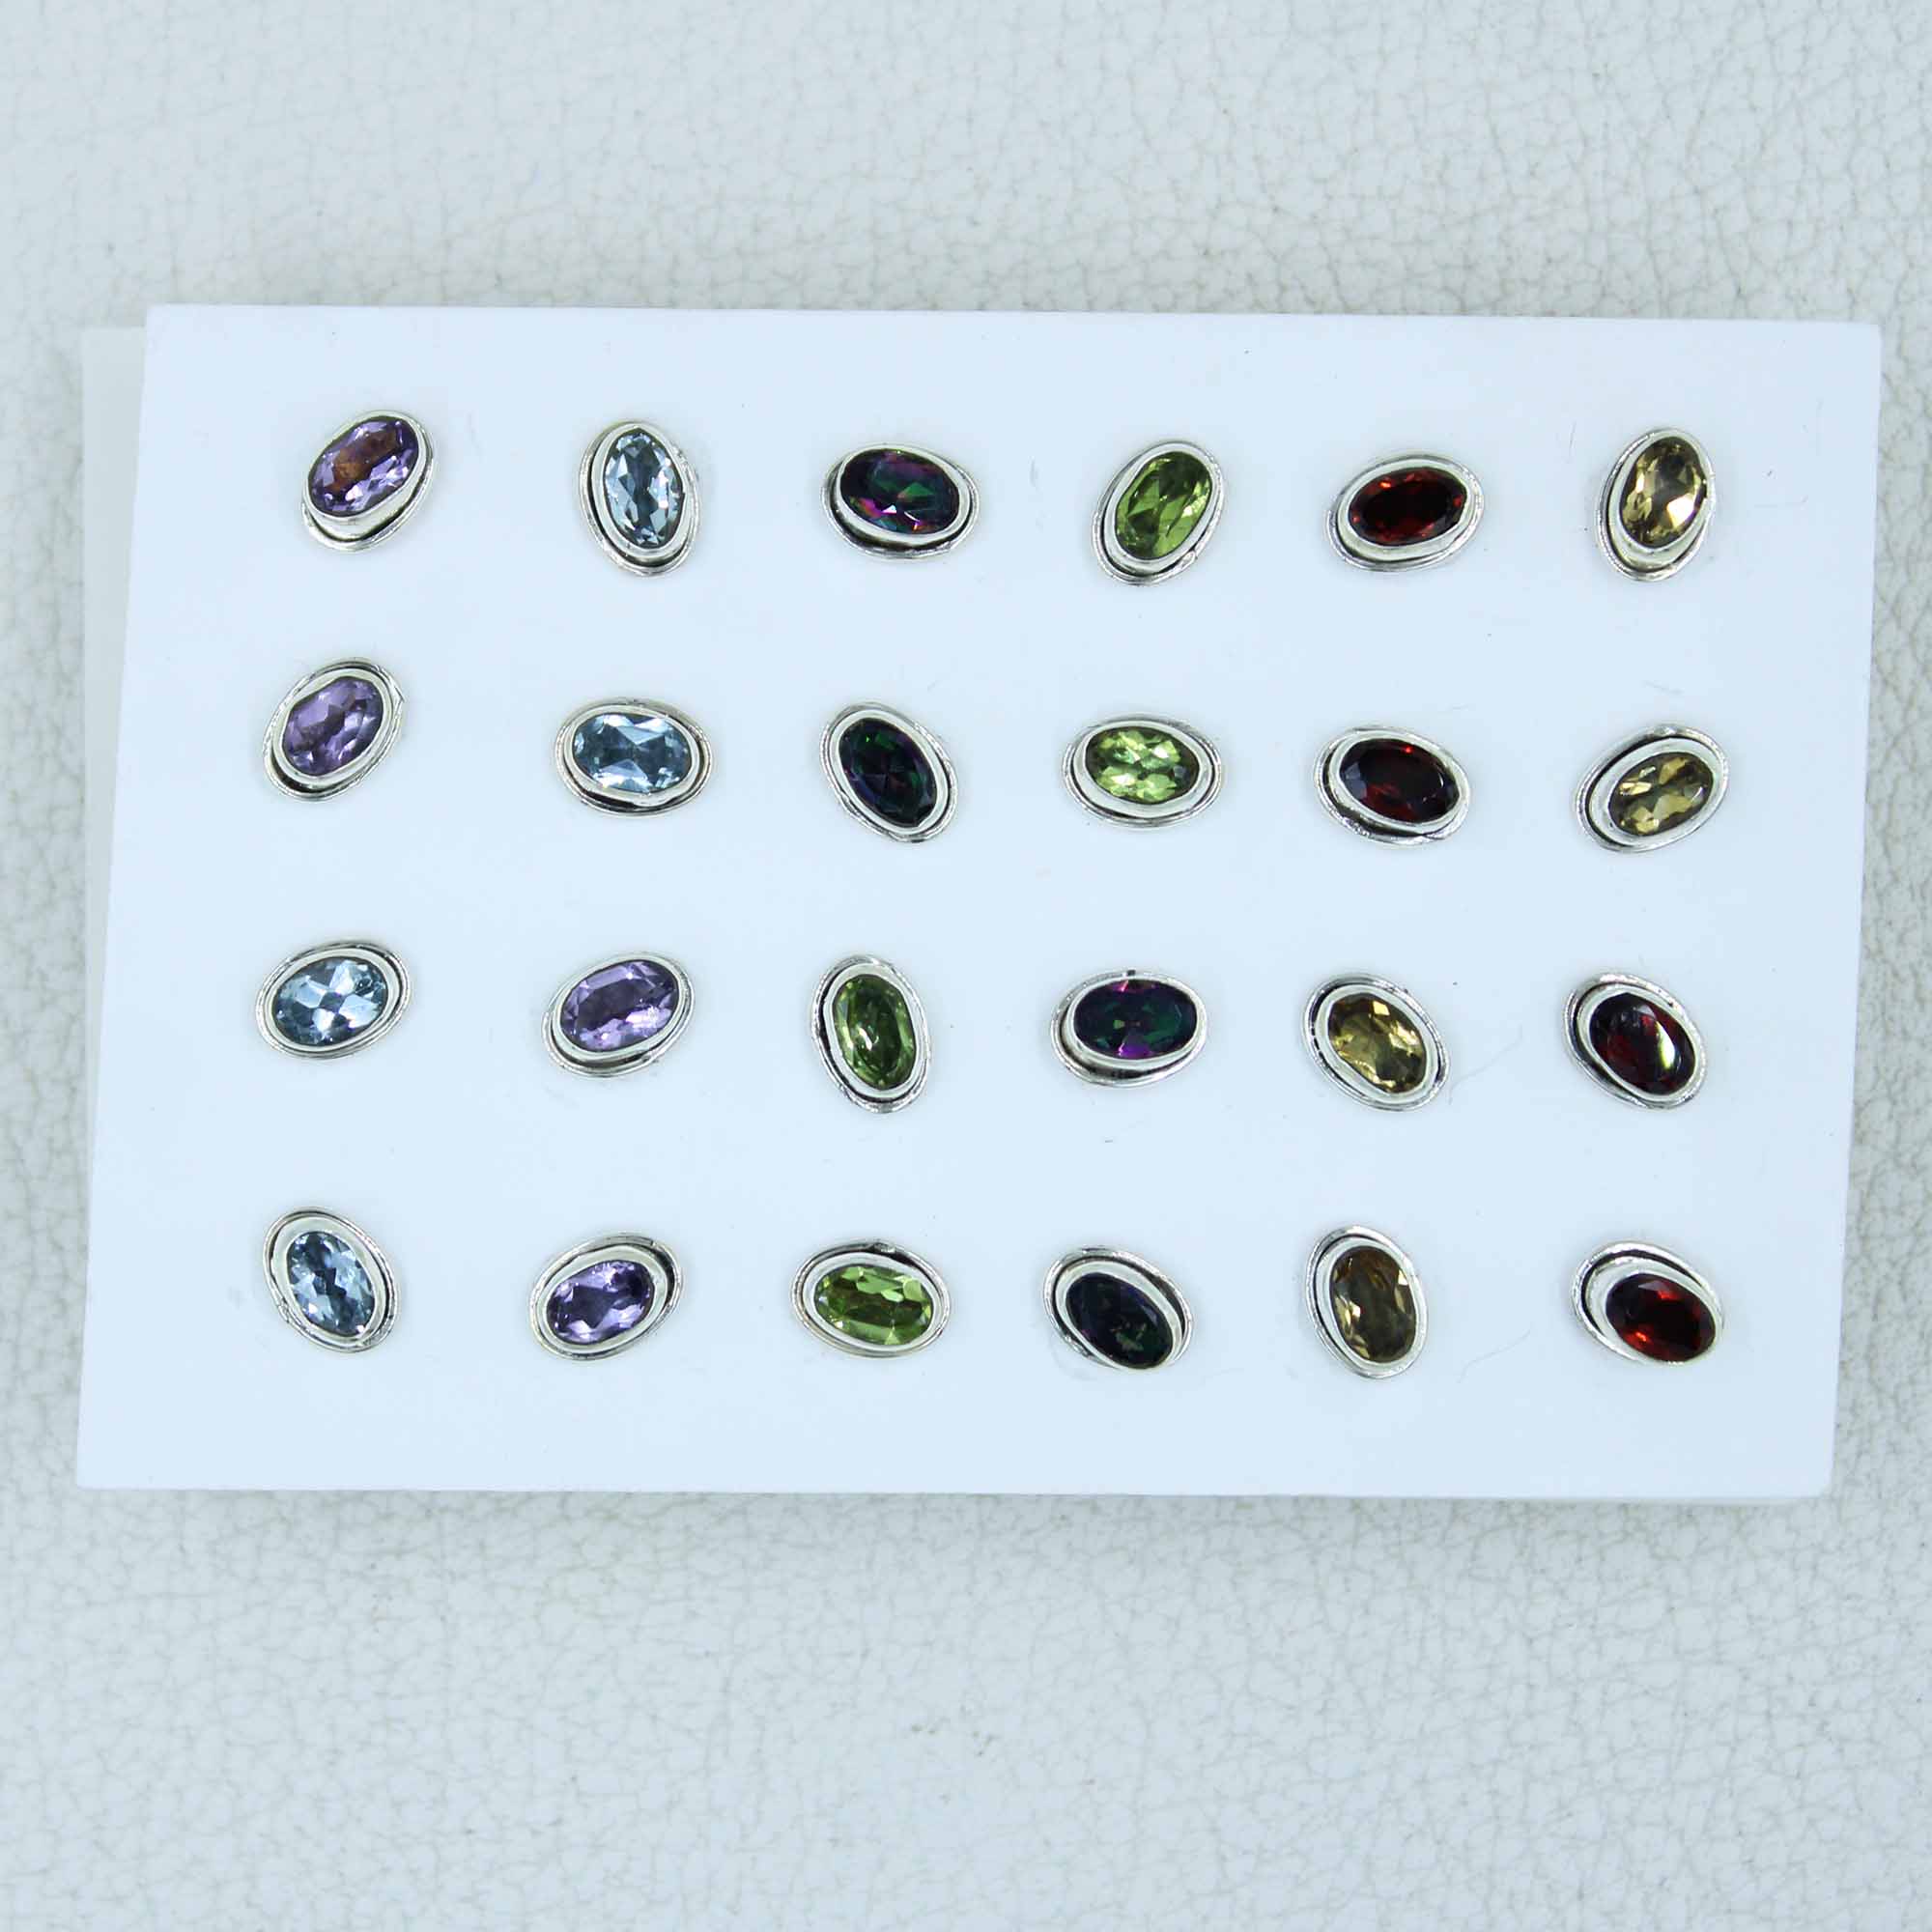 12 Pair Stud Earrings - Garnet, Topaz, Amethyst, Citrine, Peridot, Mystic quartz Jewelry